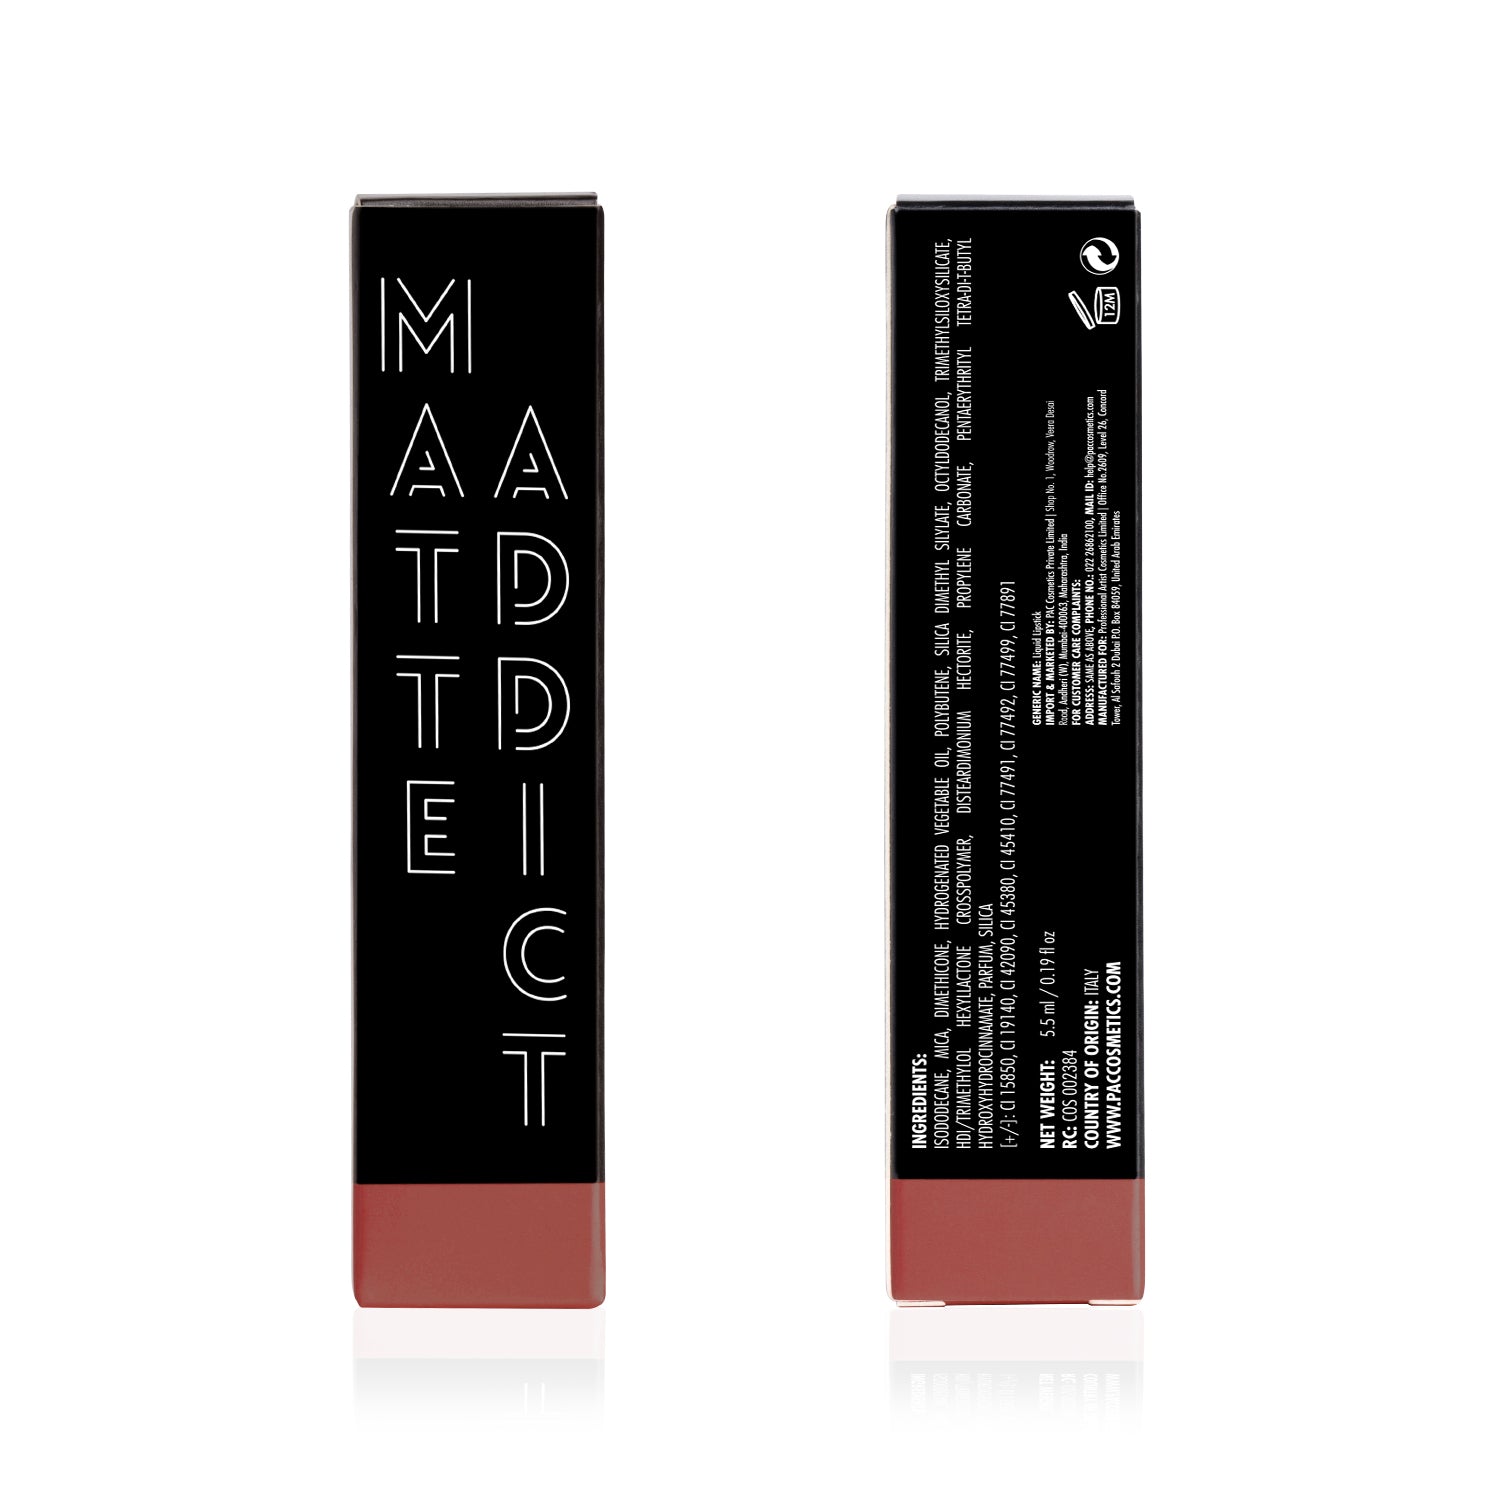 PAC Cosmetics Matte Addict #Size_5.5 ml+#Color_Nude Delight